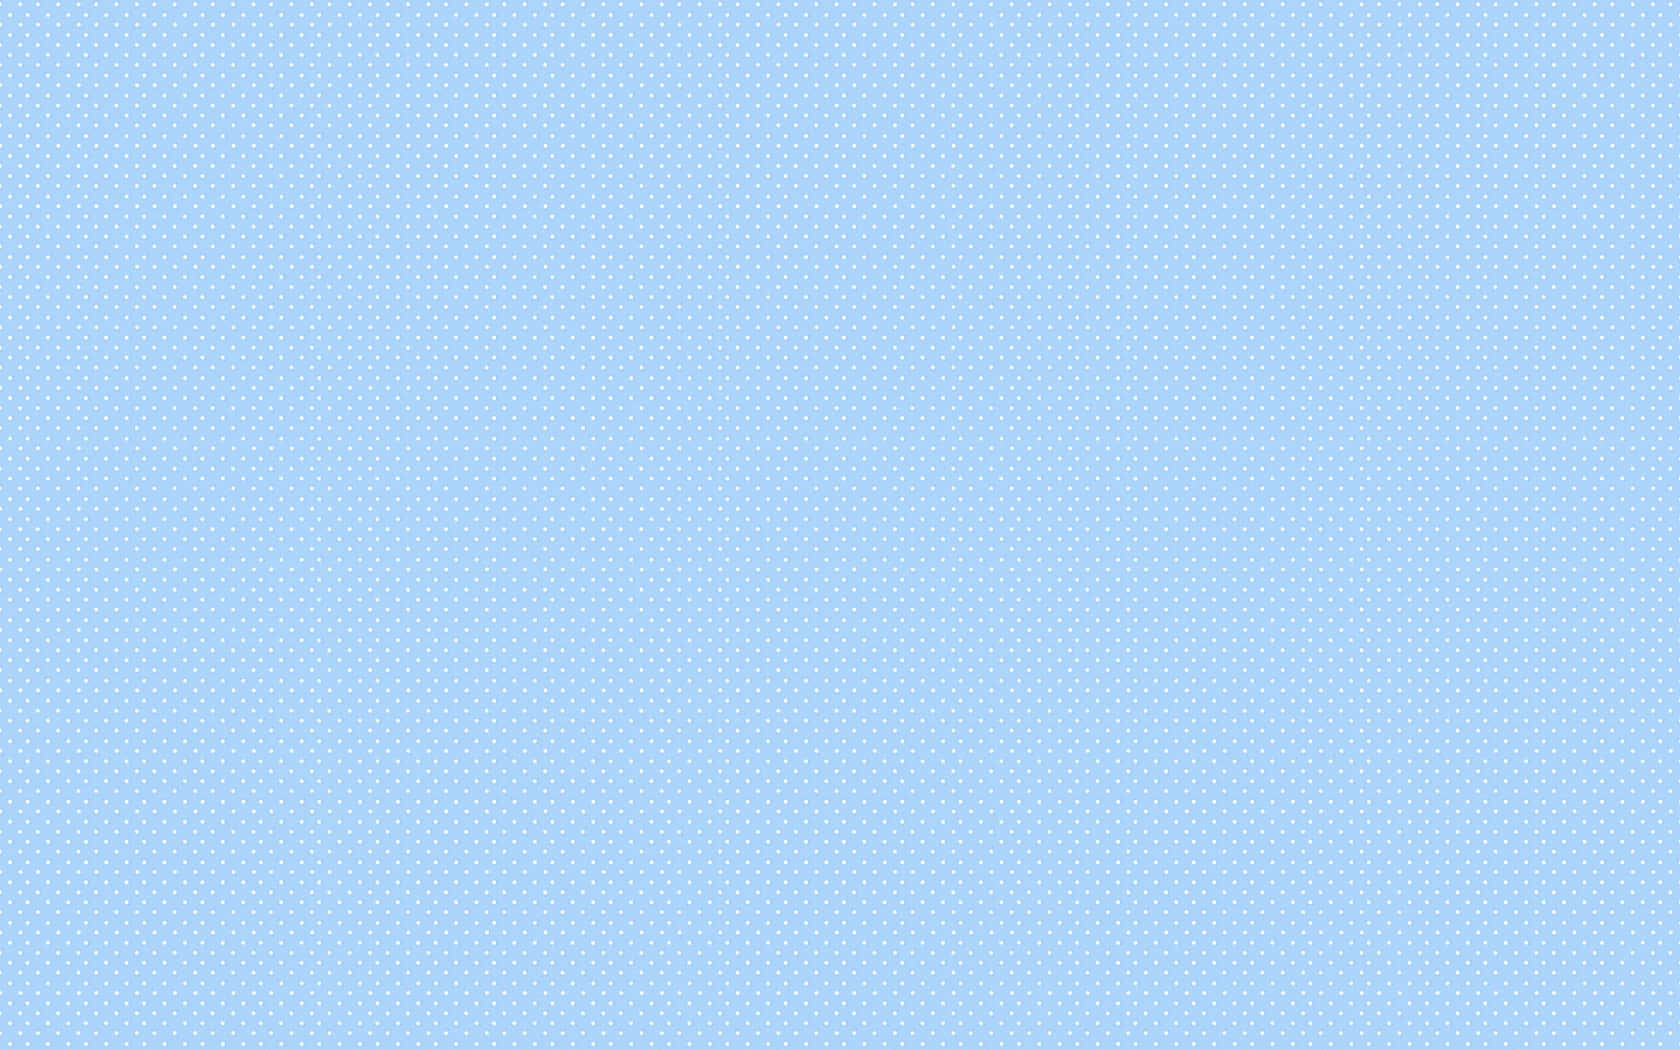 Preppy Blue Polka Dot Pattern Wallpaper